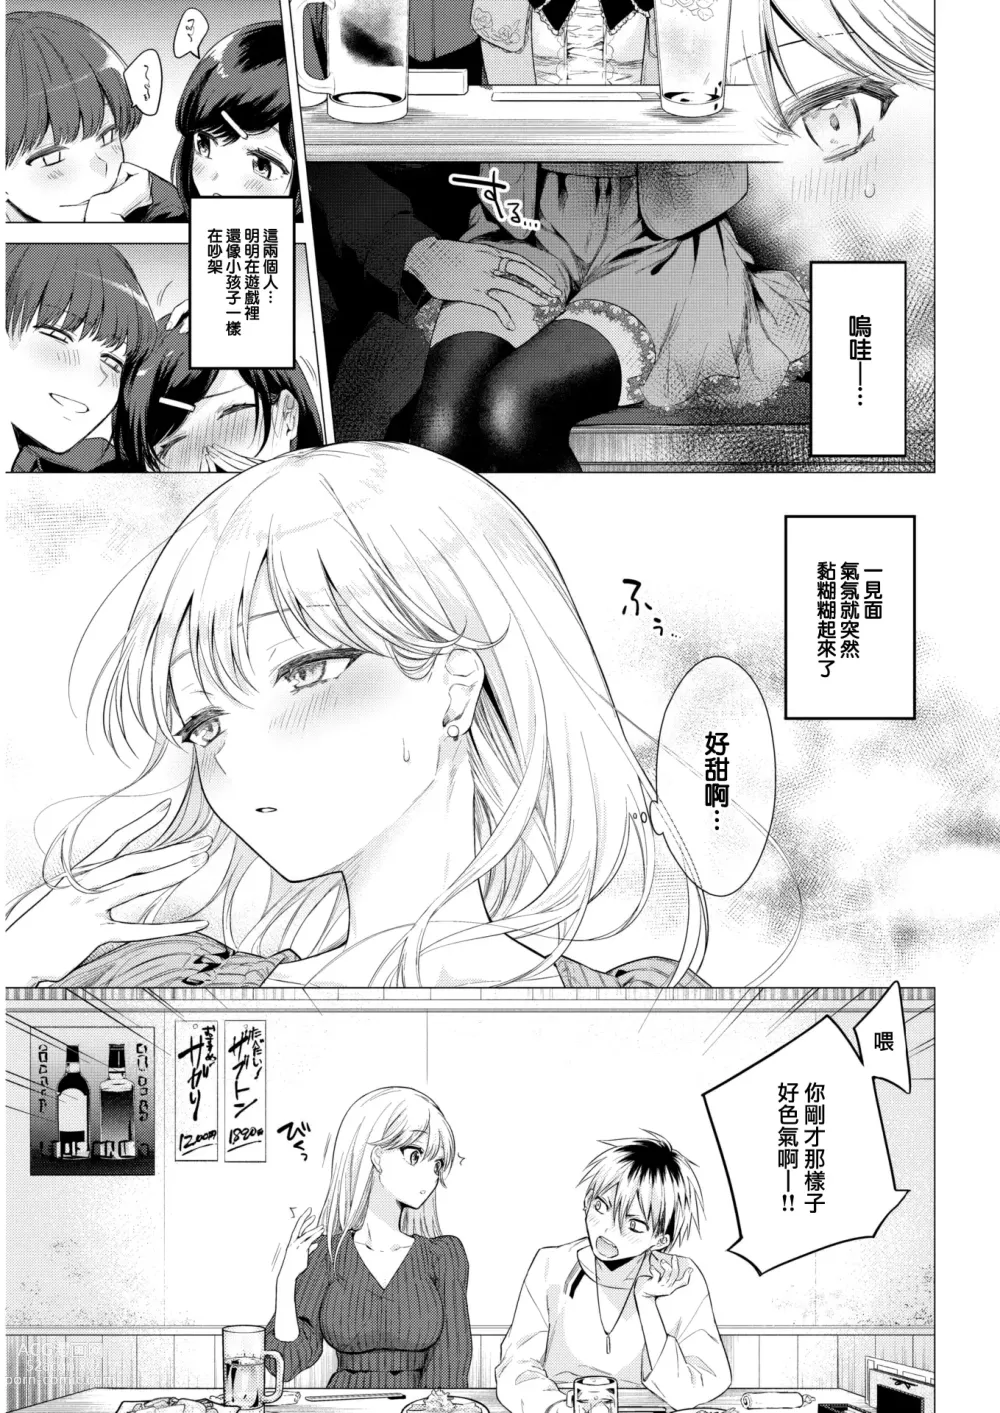 Page 8 of manga Zurukute Gomenne